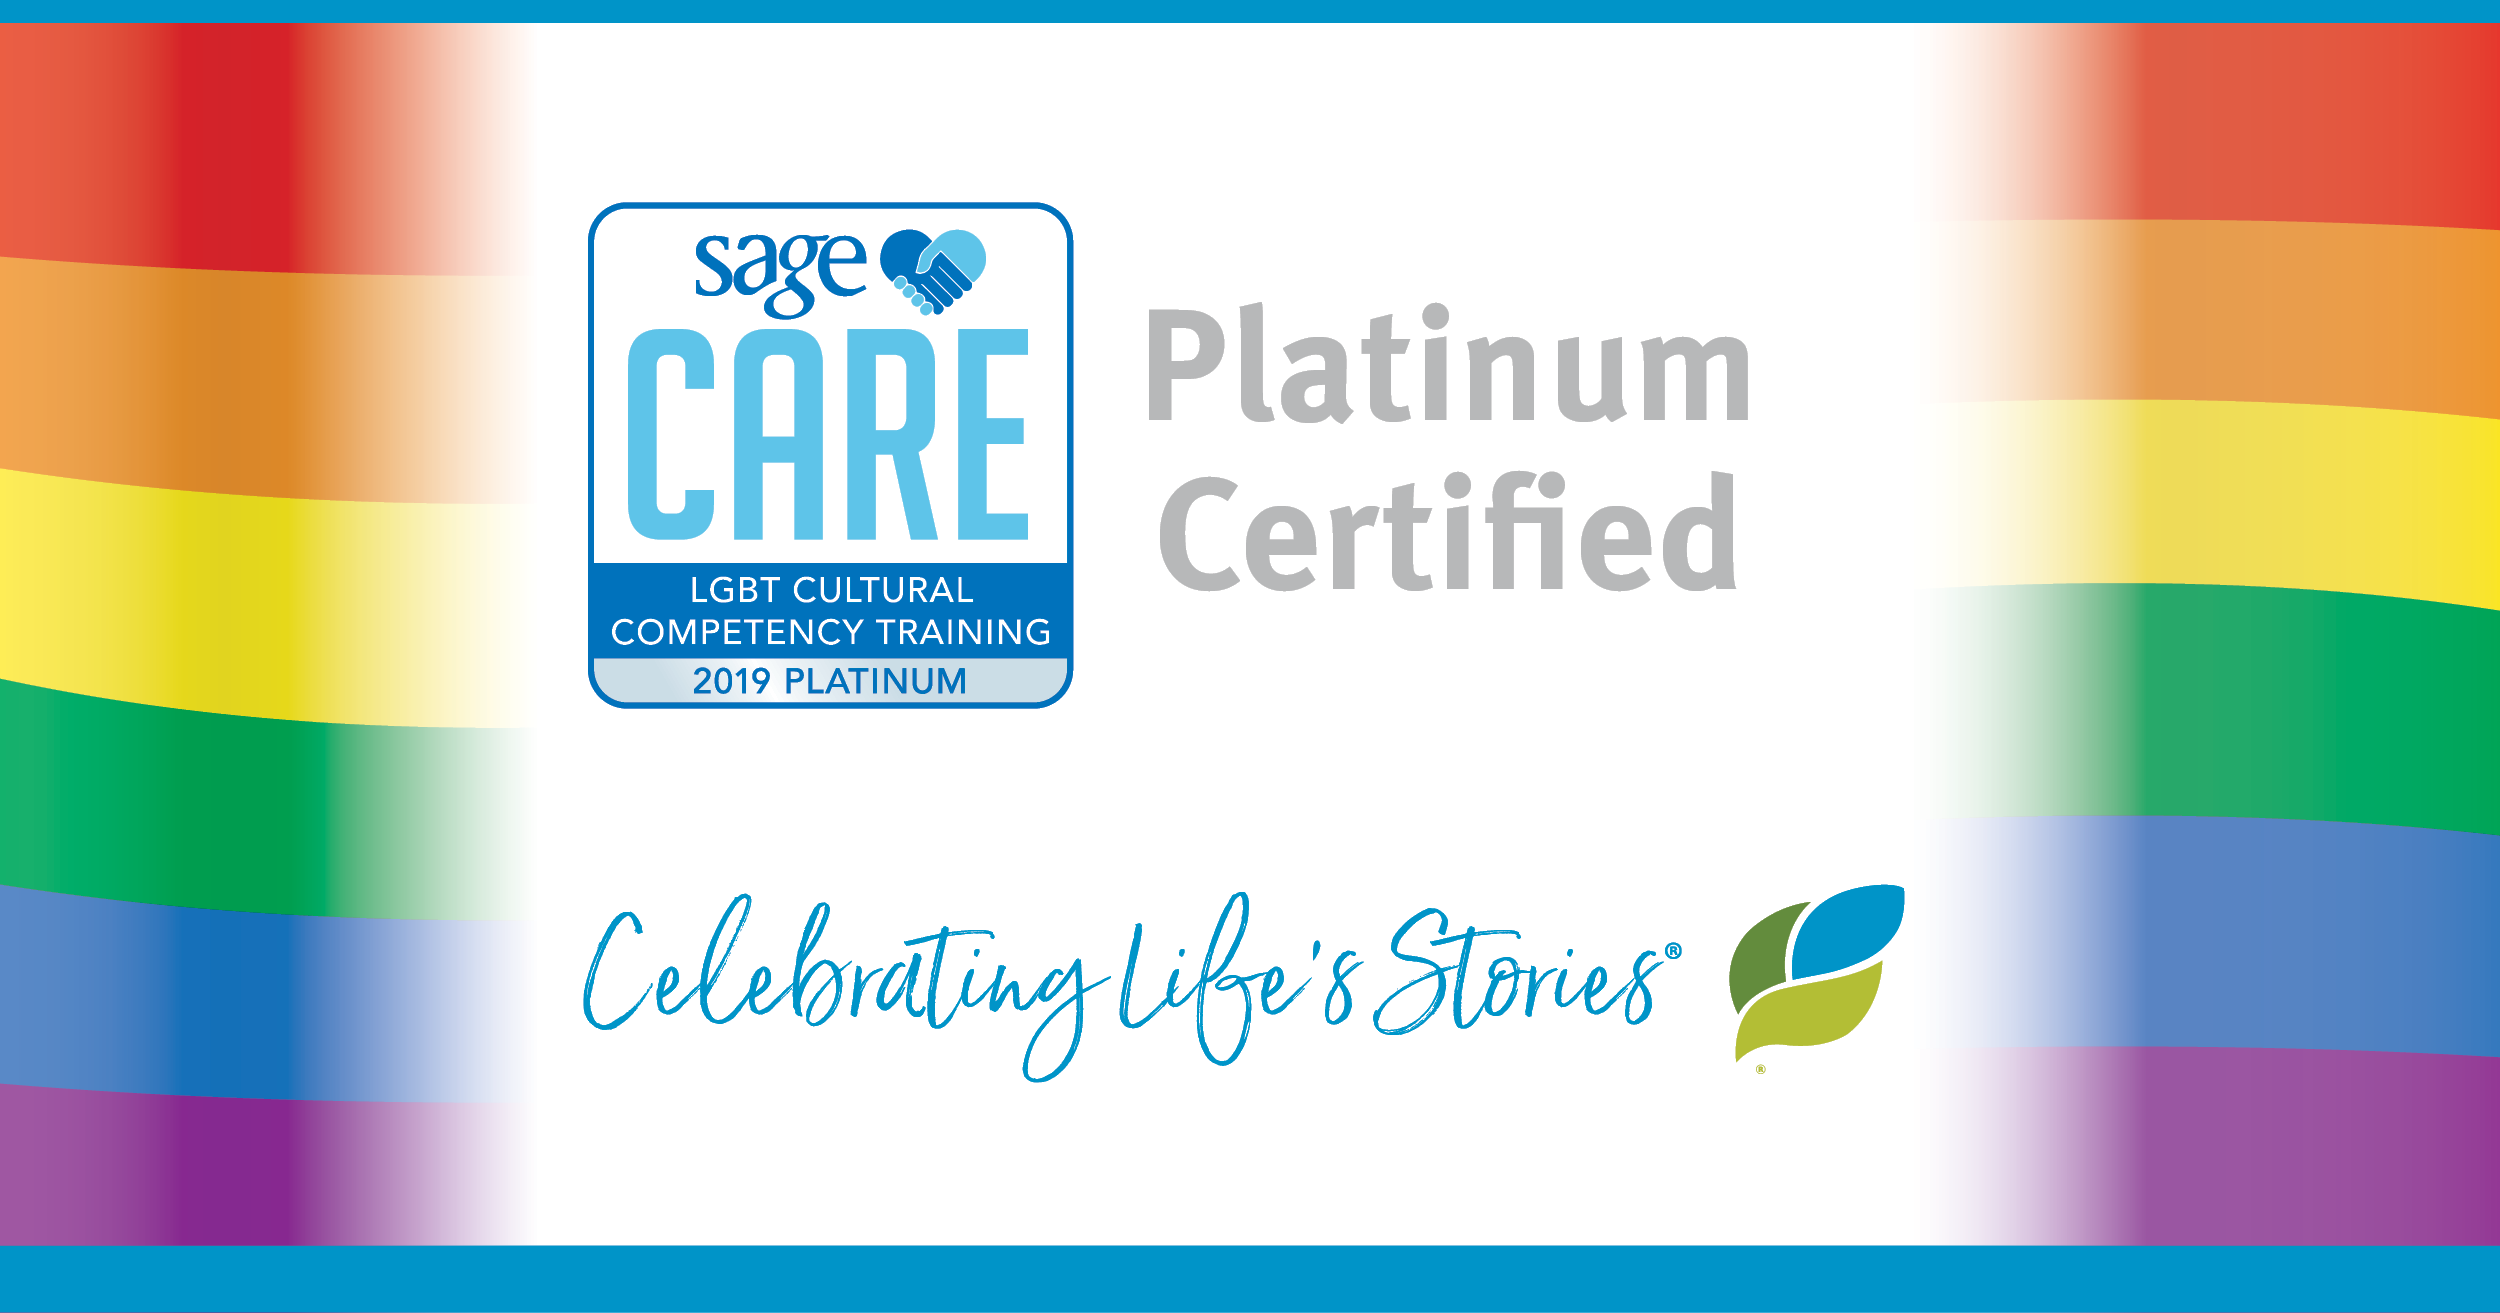 SAGECare Platinum Certified